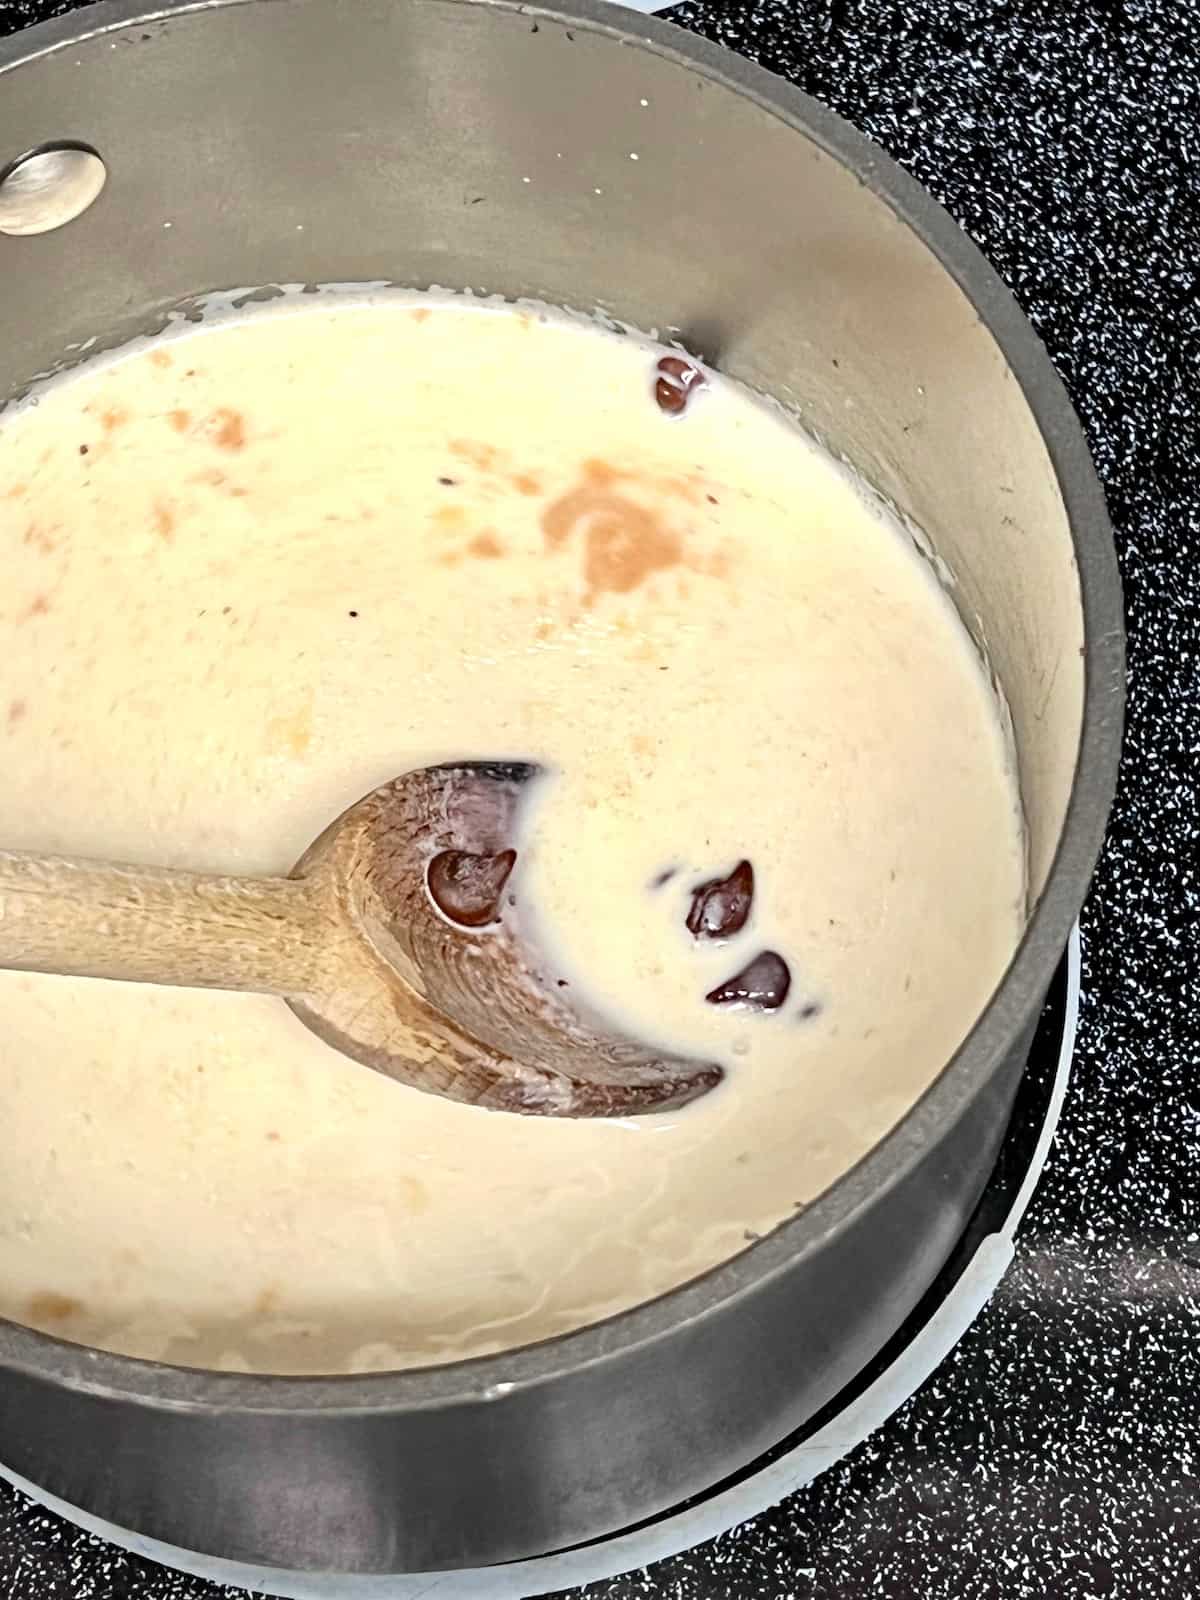 Chocolate being stirred into warm cream.